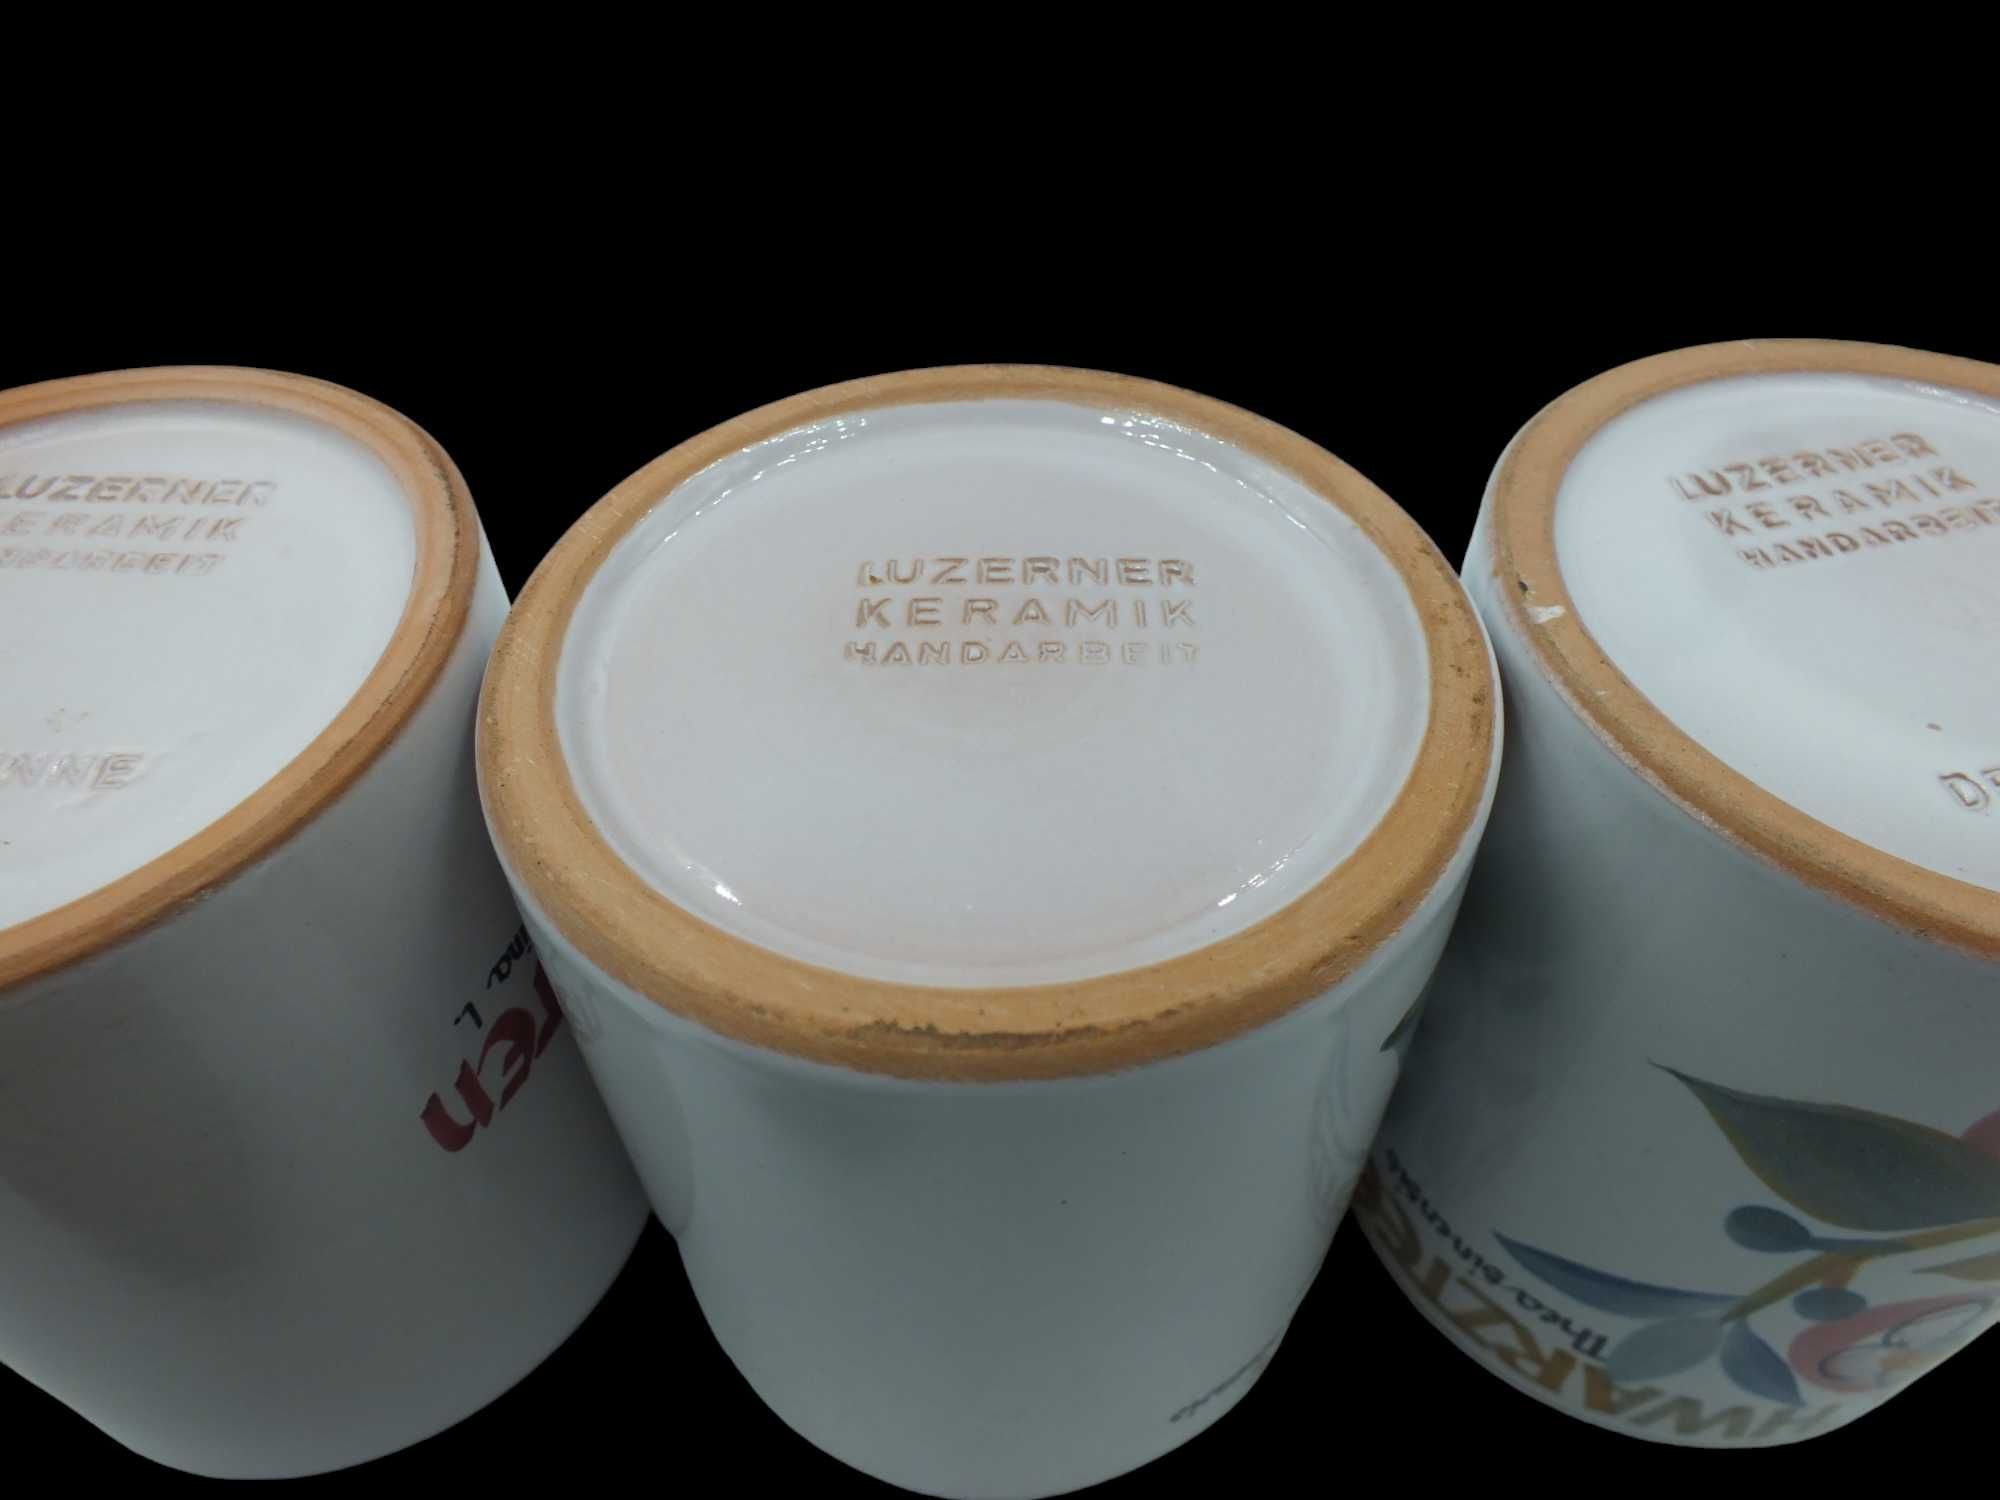 Luzerner keramik pojemniki kuchenne herbata B4/010462